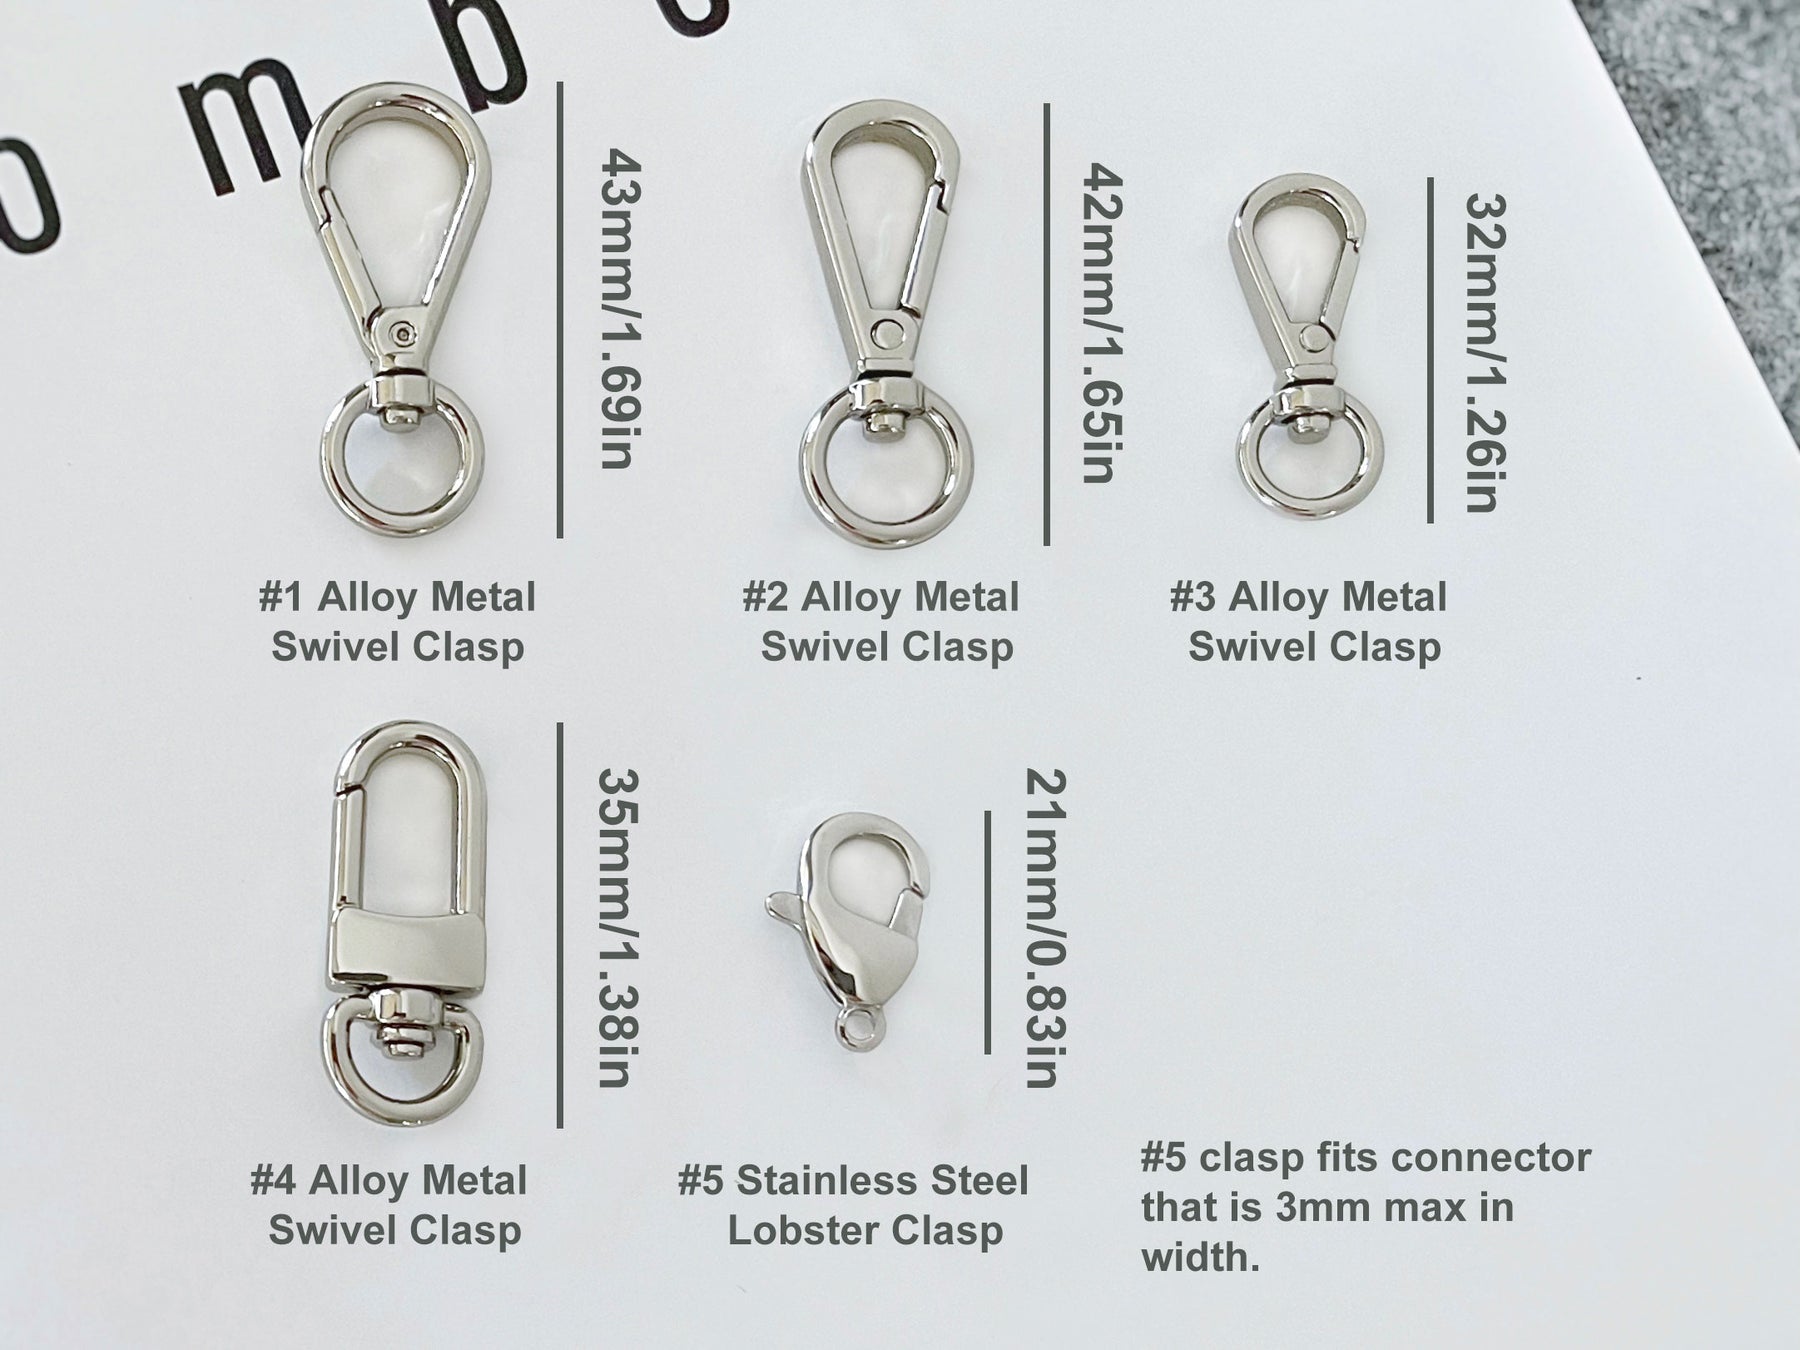 Chain Strap Extender Accessory for Louis Vuitton Bags & More -   Australia